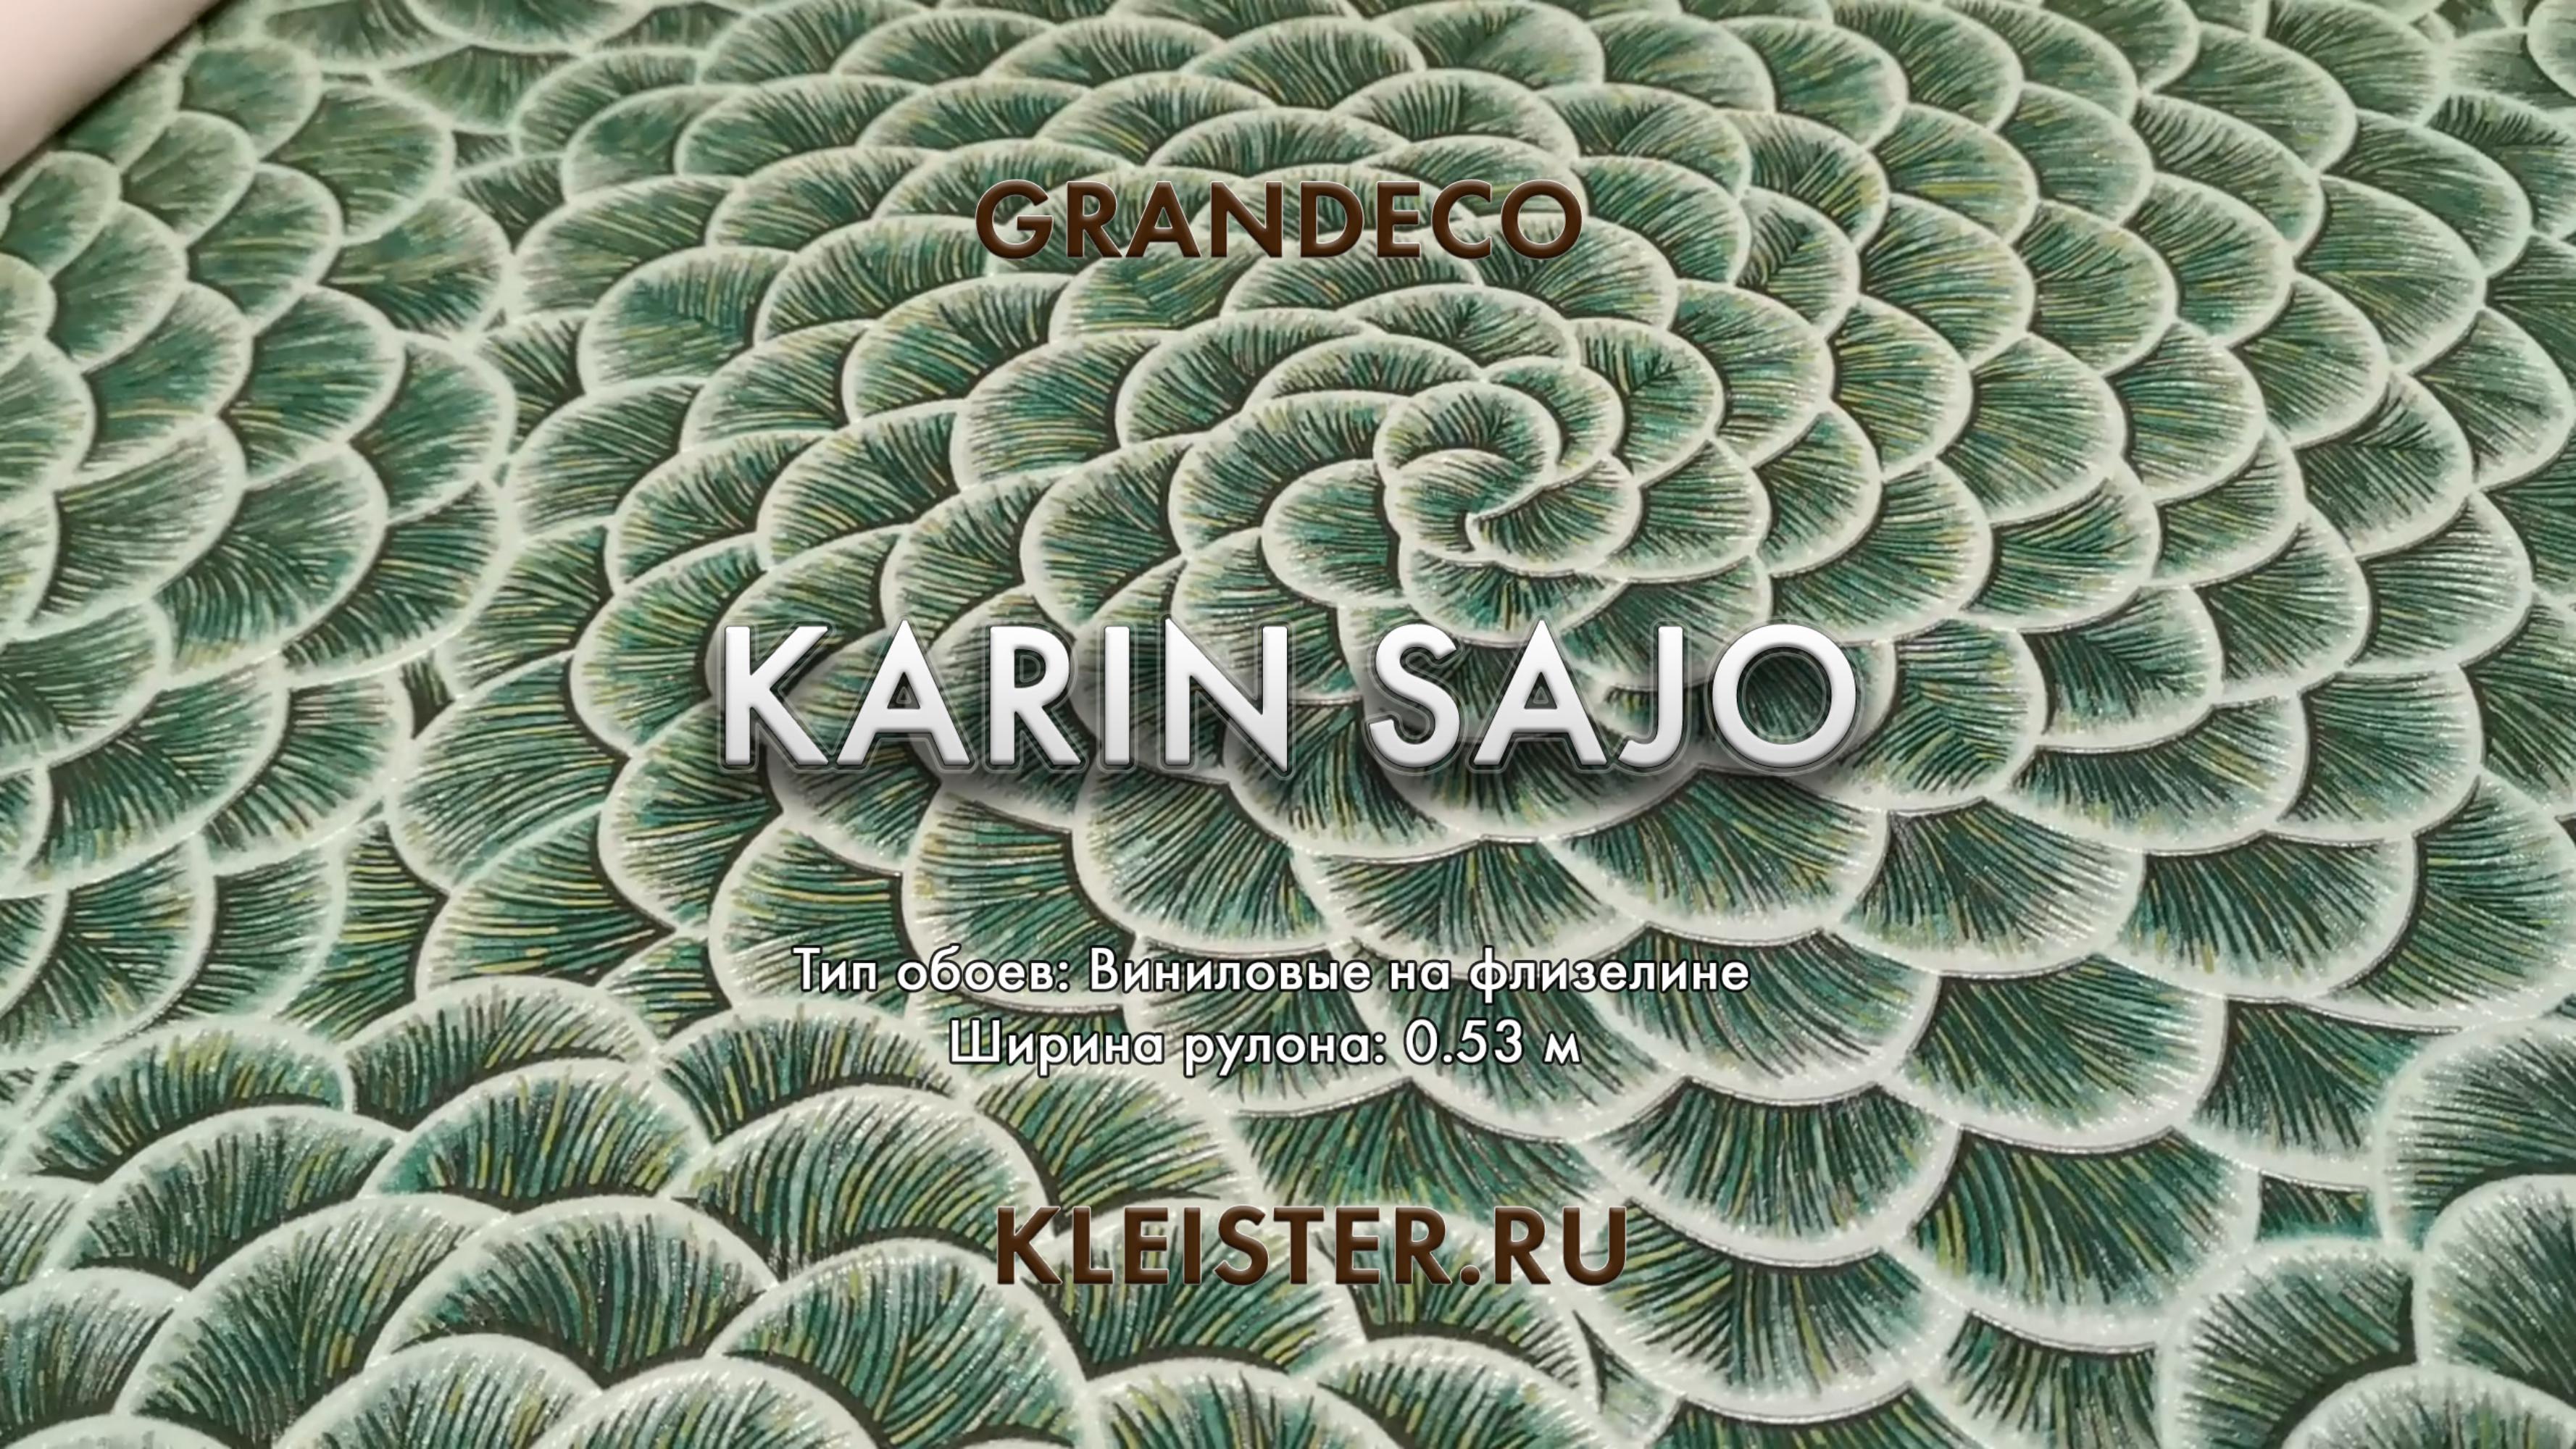 Обои Karin Sajo от Grandeco